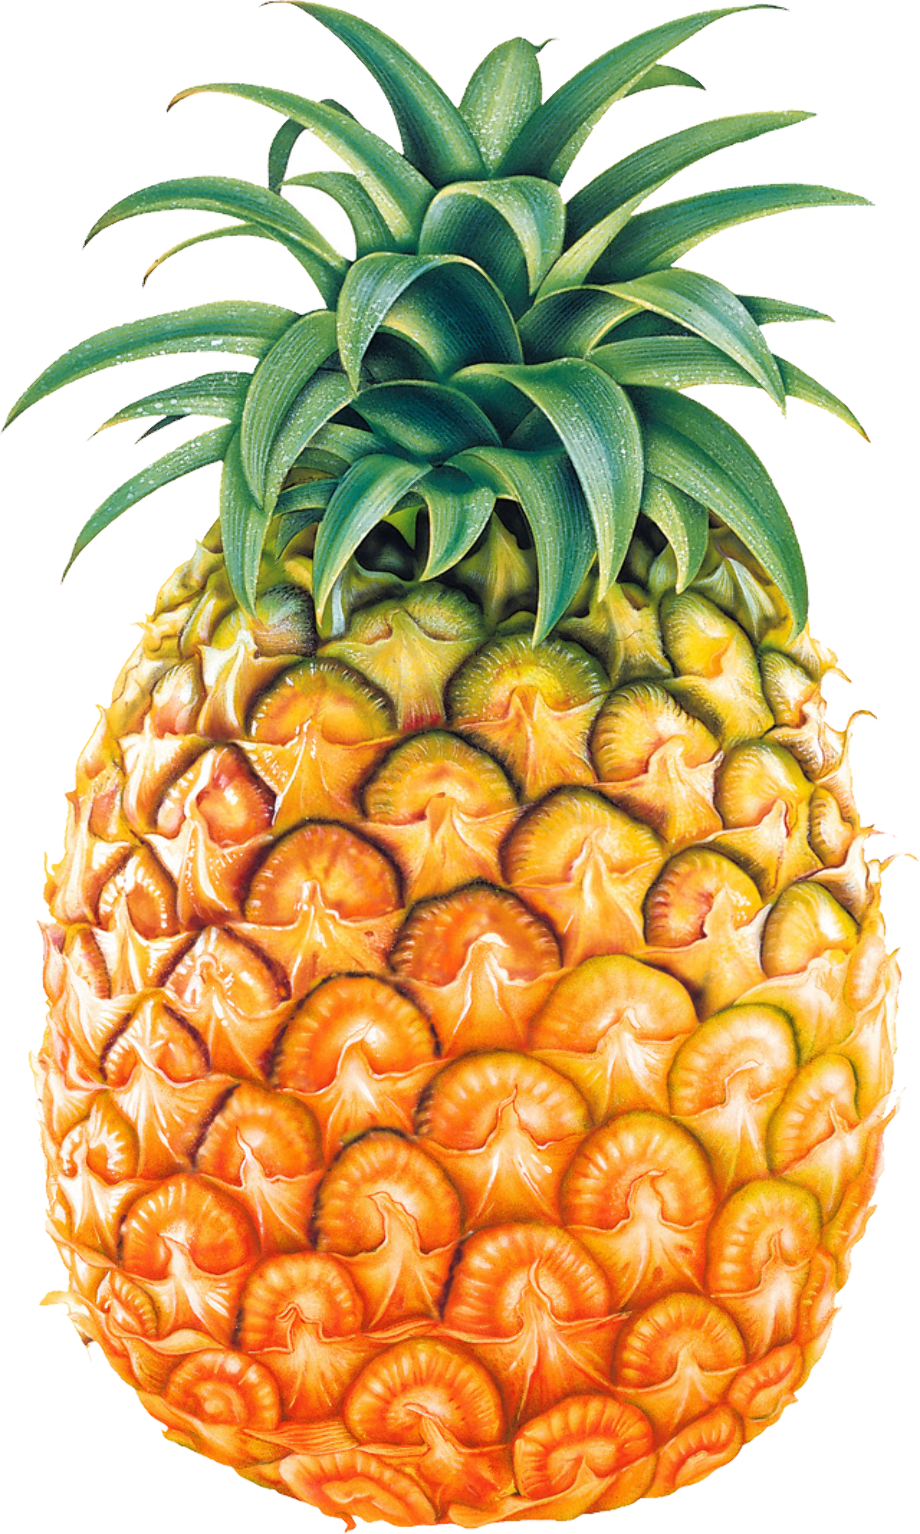 Pineapple high resolution